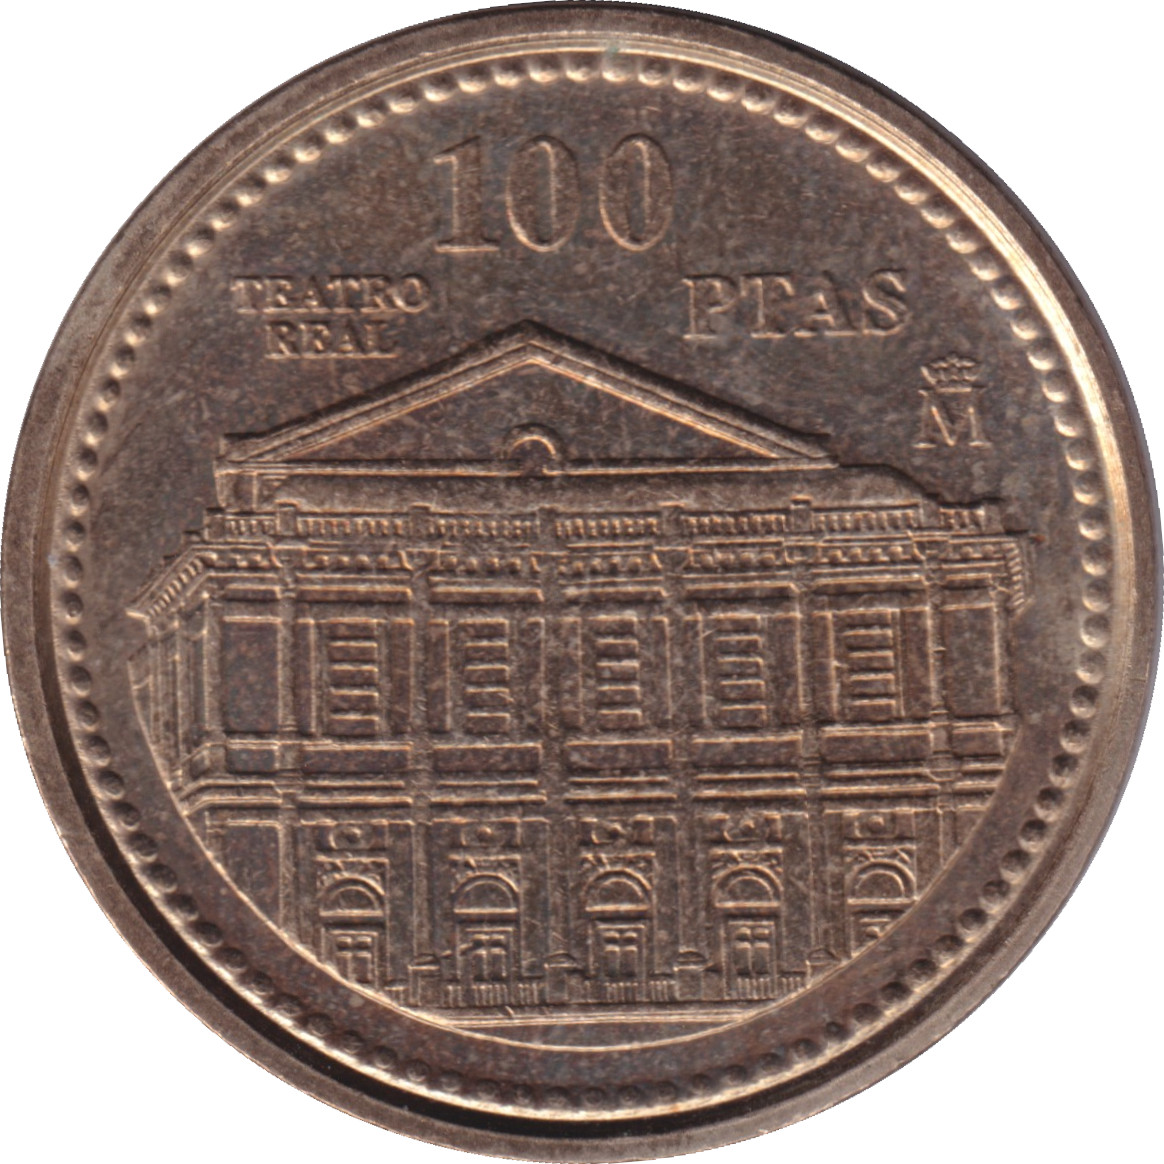 100 pesetas - Théatre